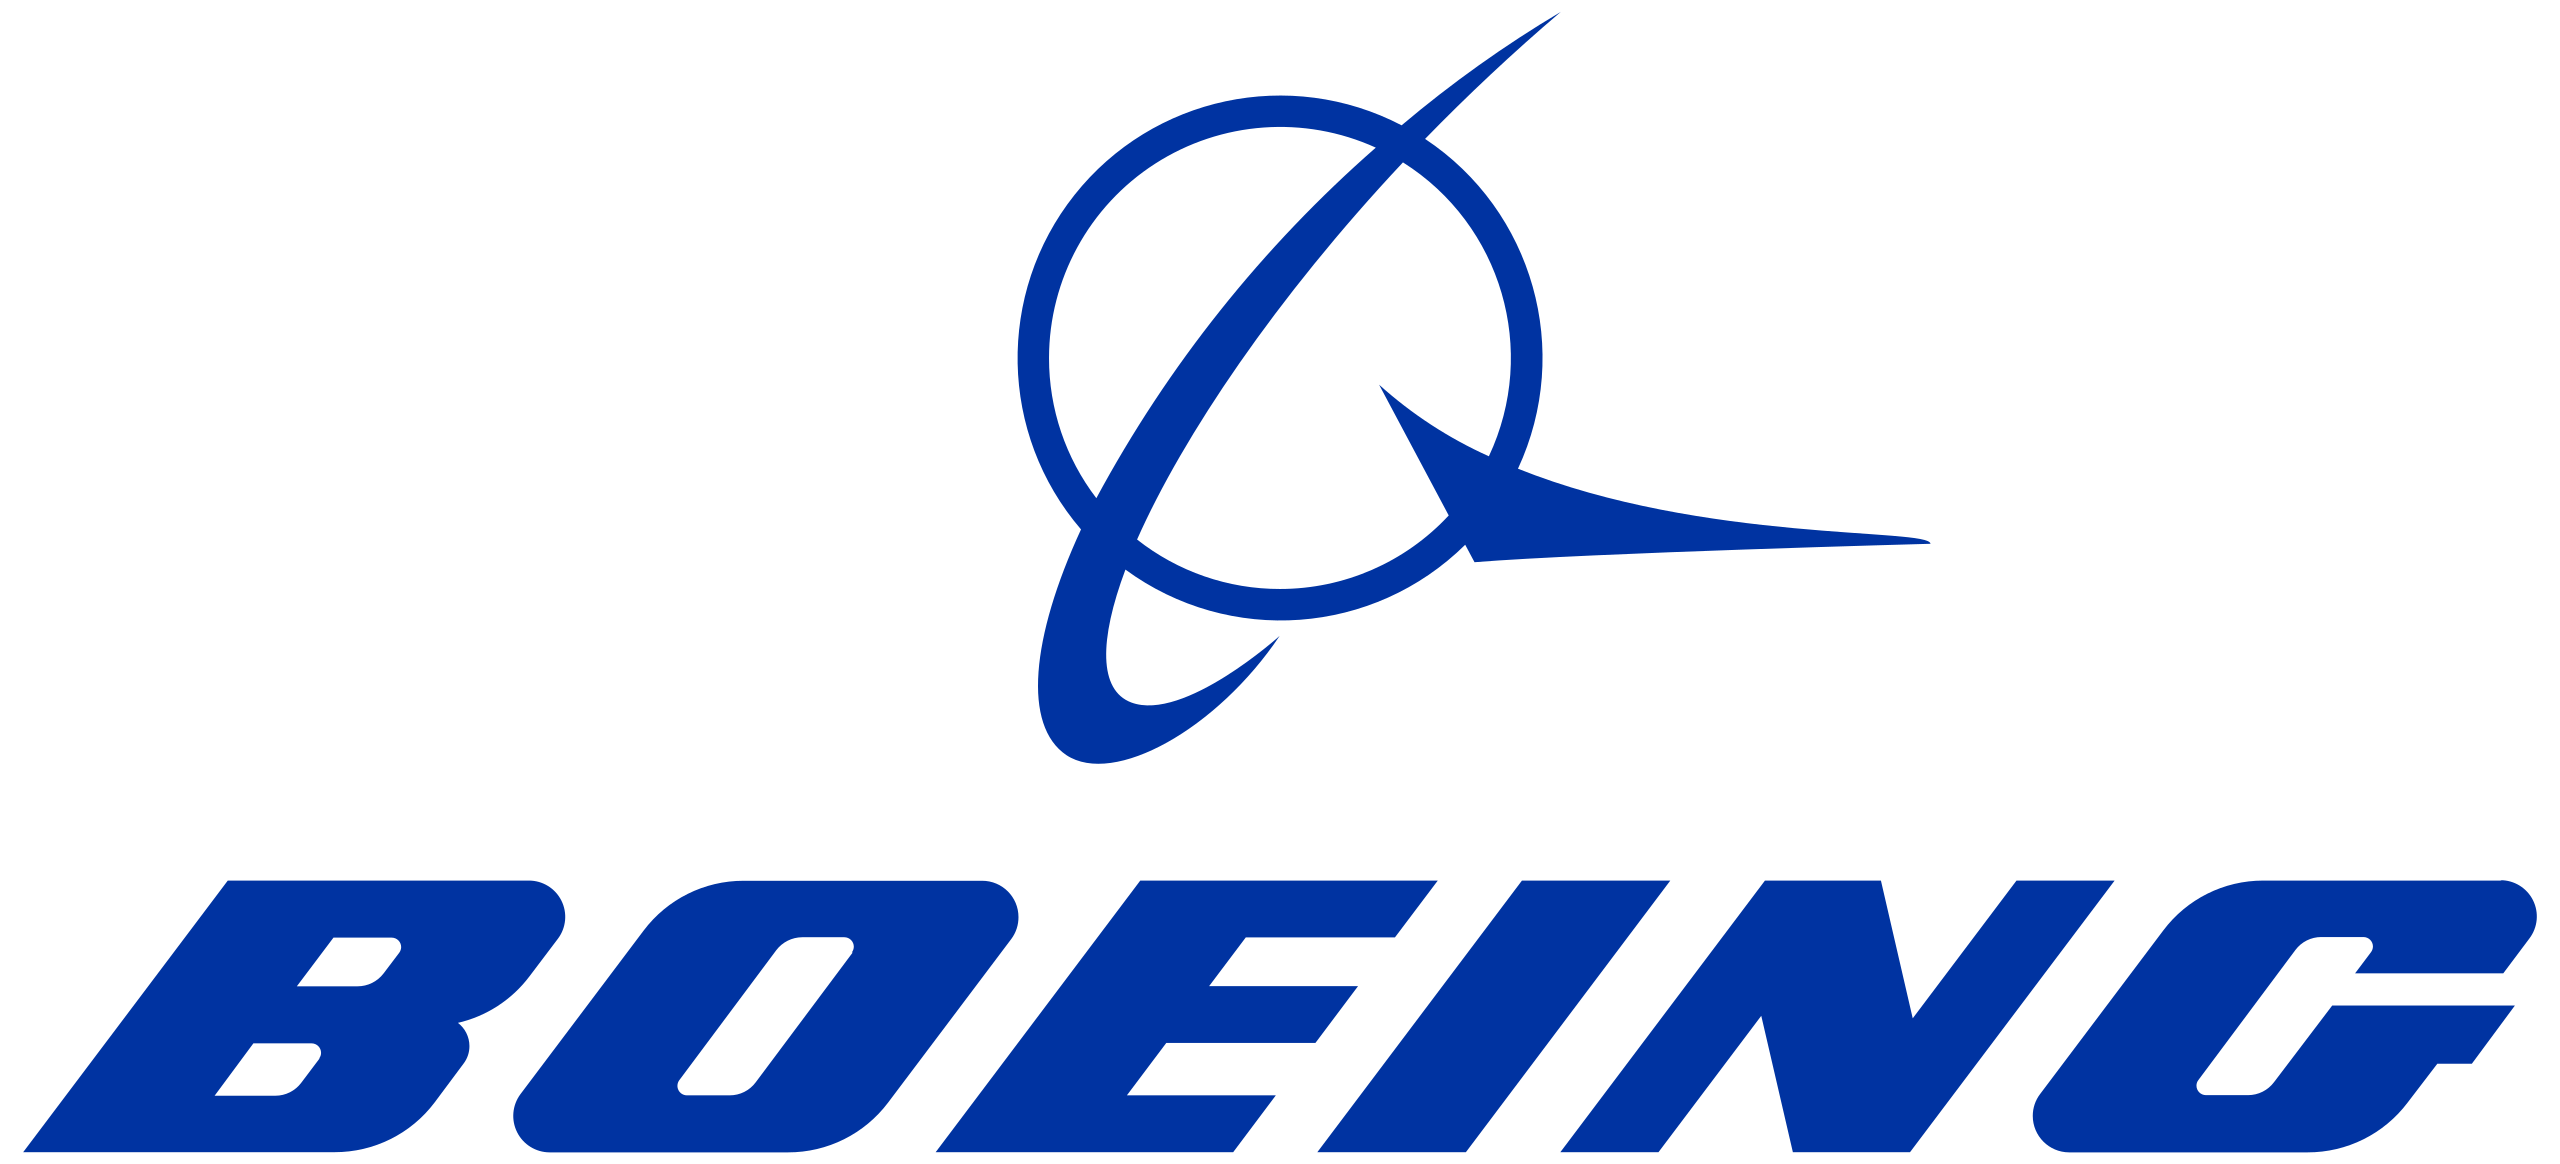 Boeing логотип PNG